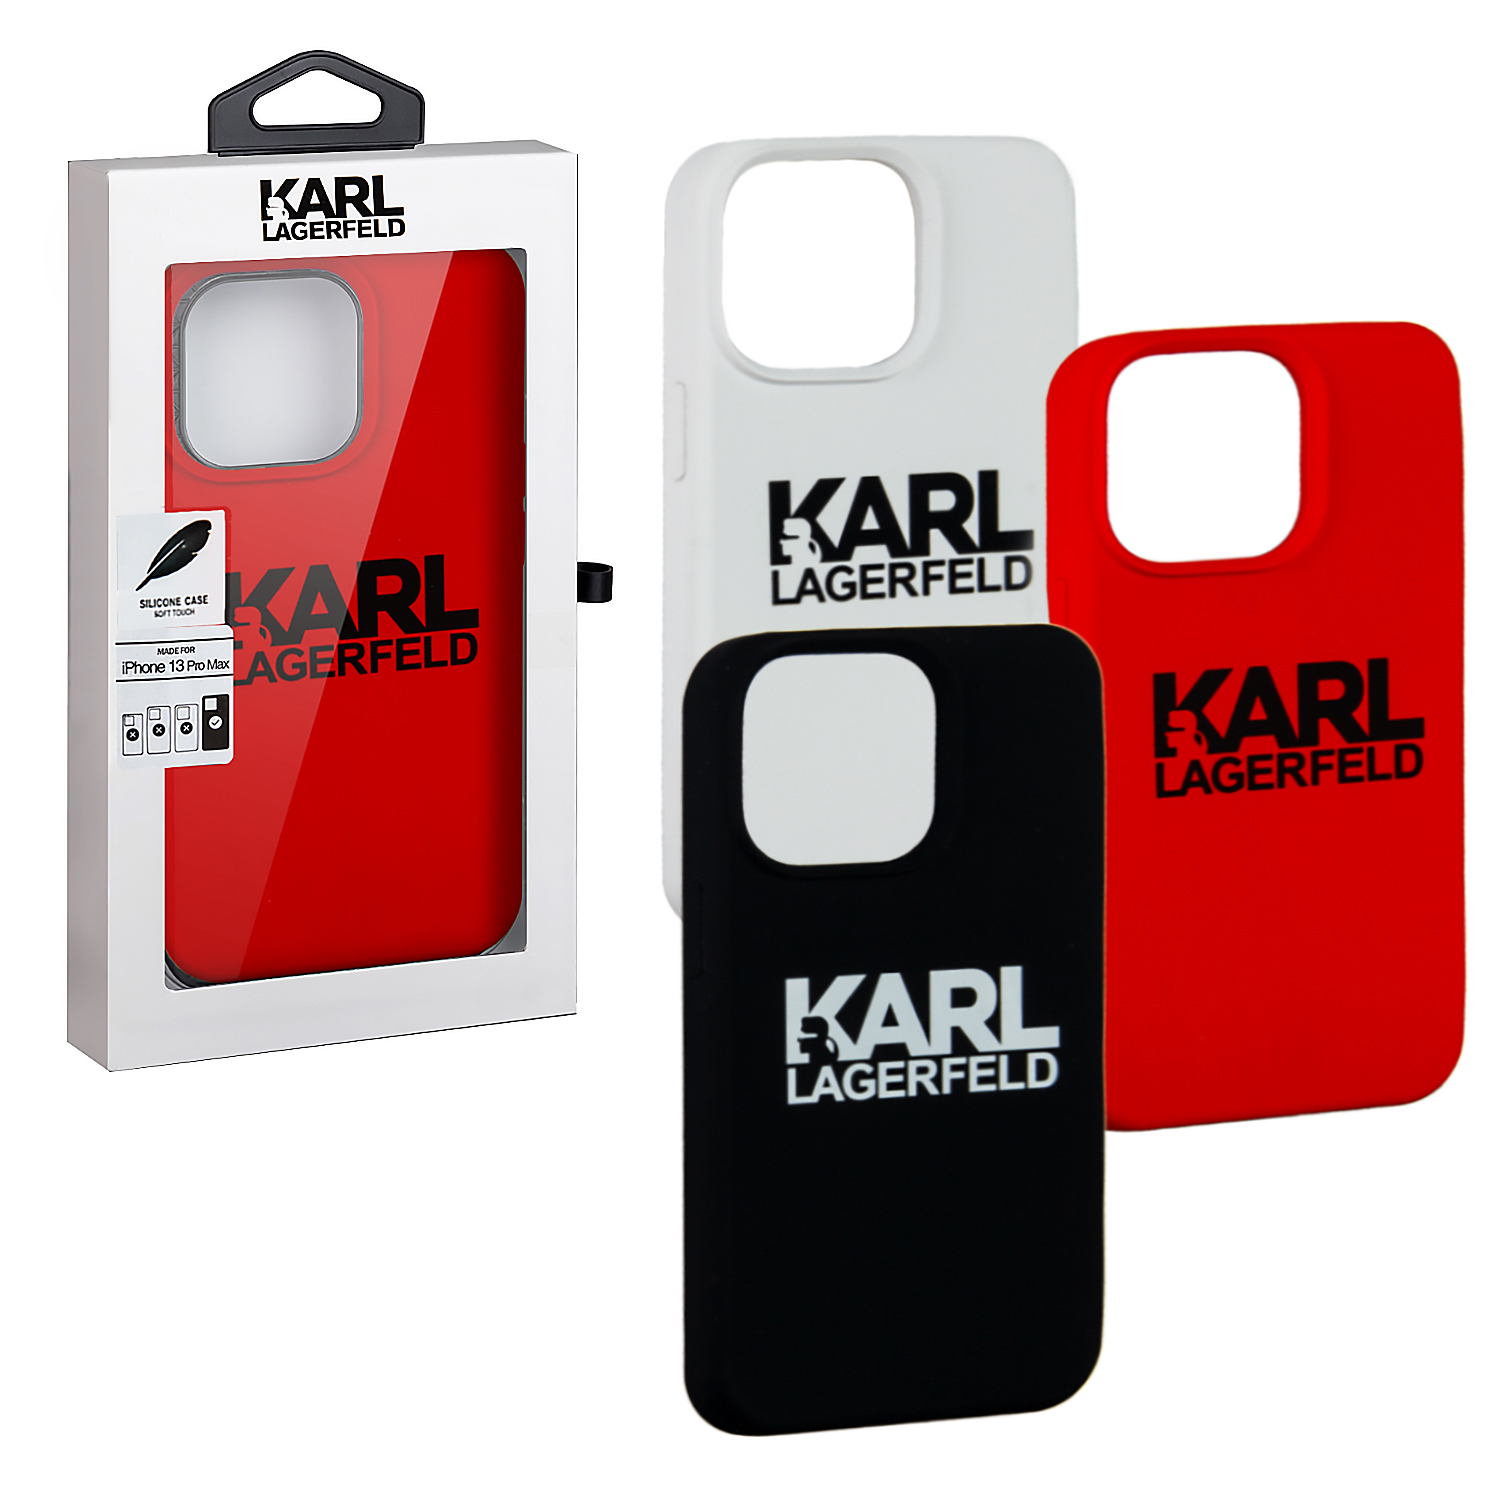 Karl lagerfeld iphone 15 pro